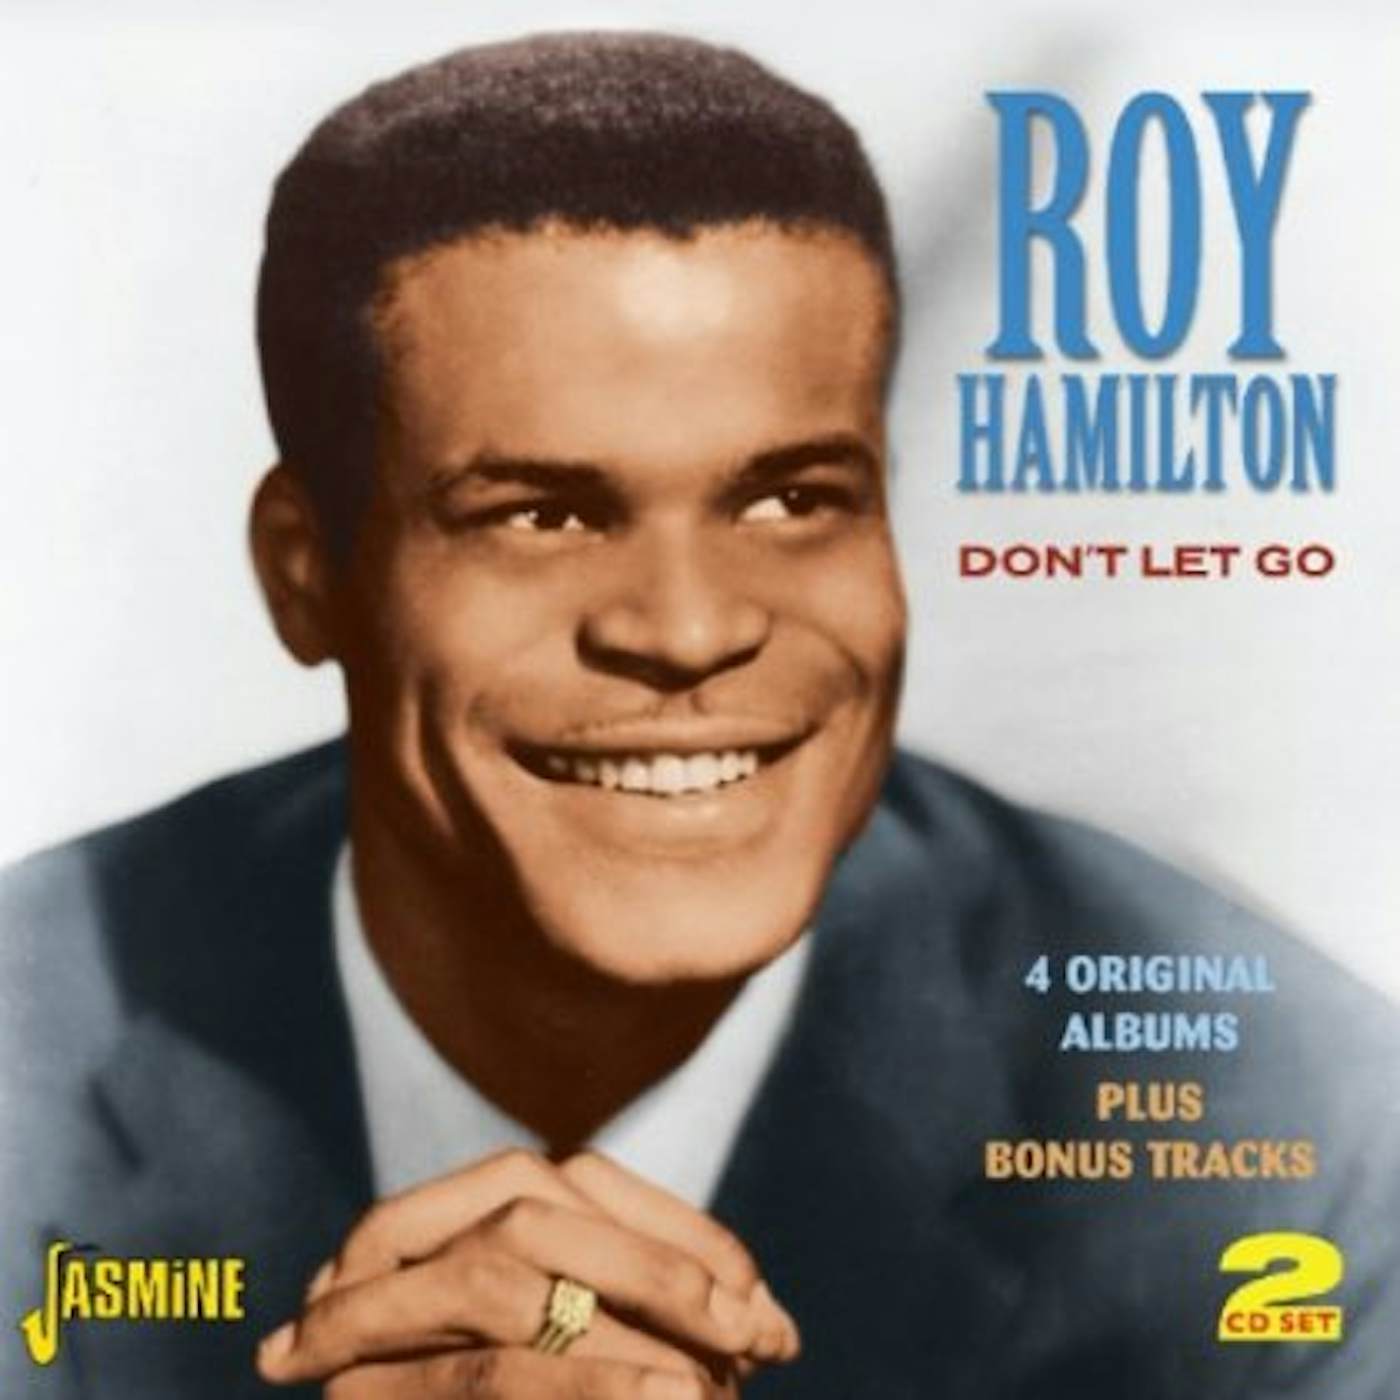 Roy Hamilton DON'T LET GO CD